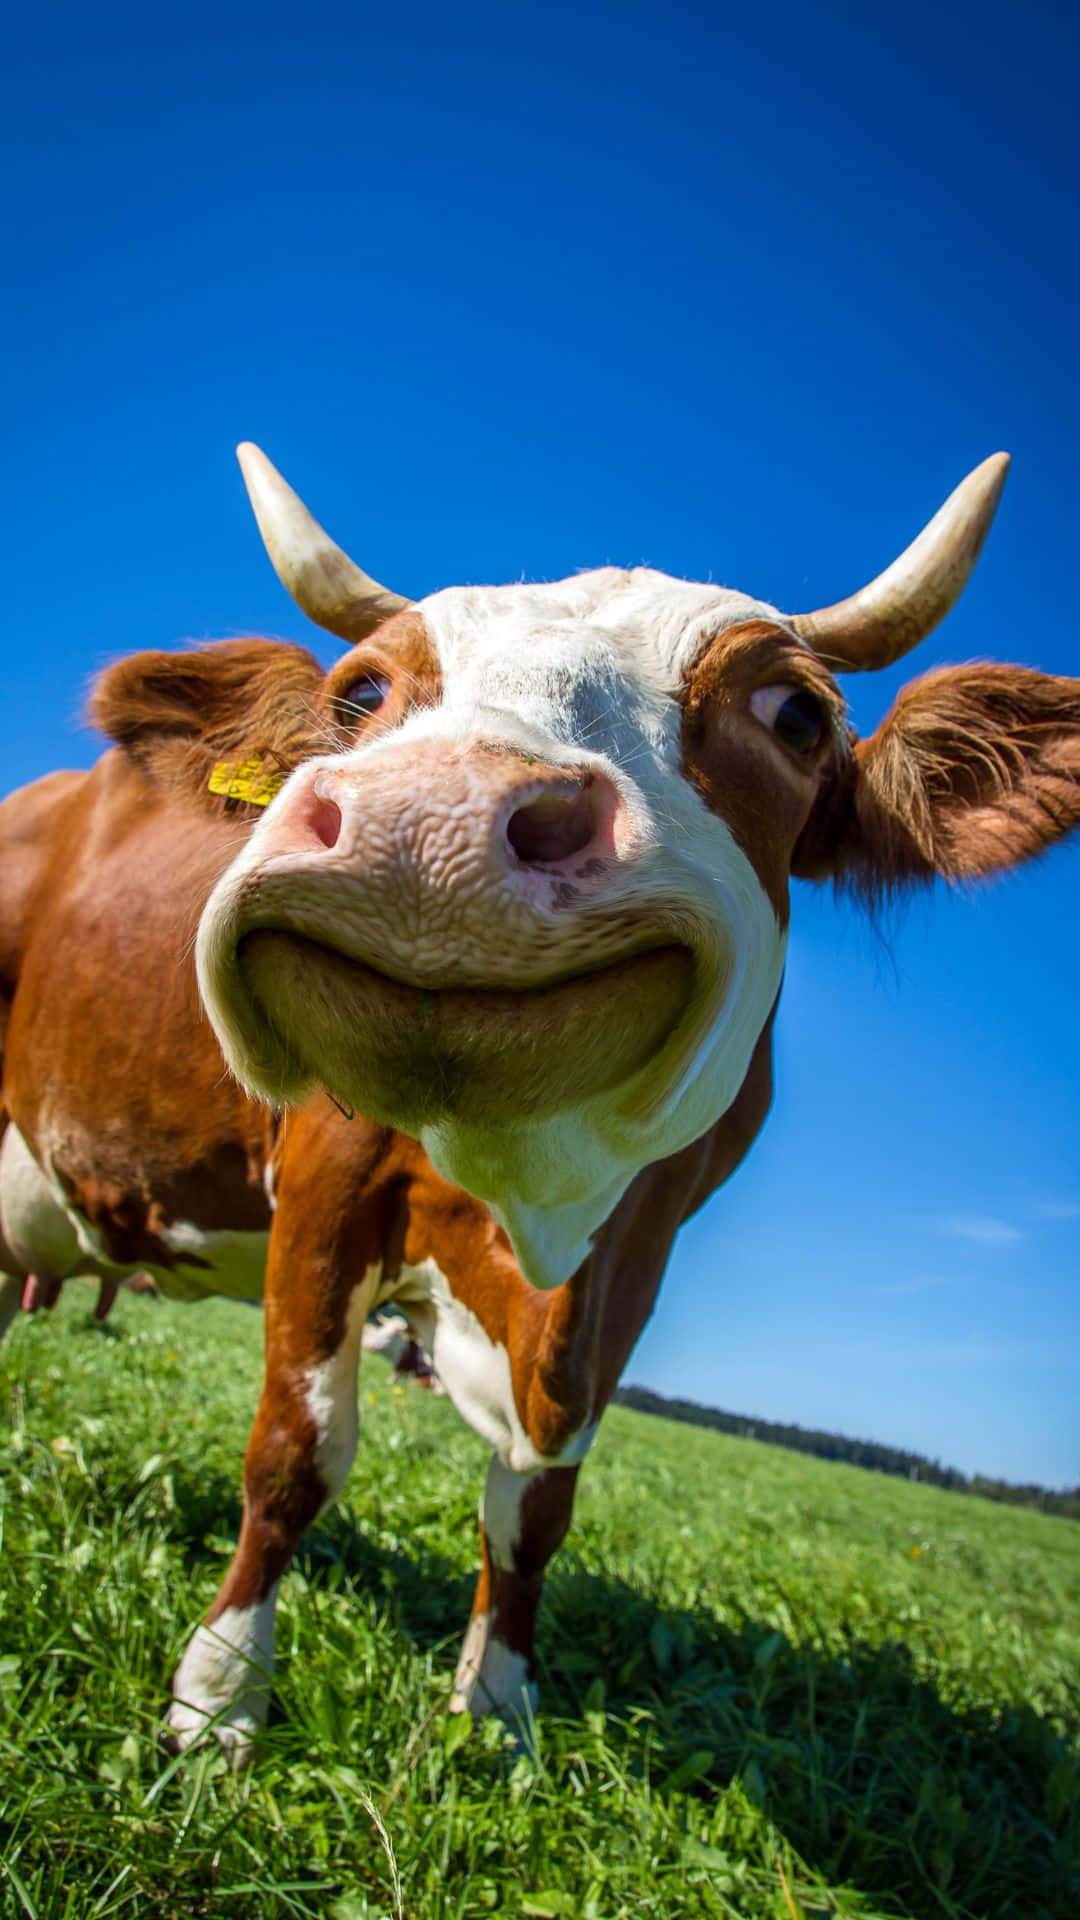 A Cow In A Field